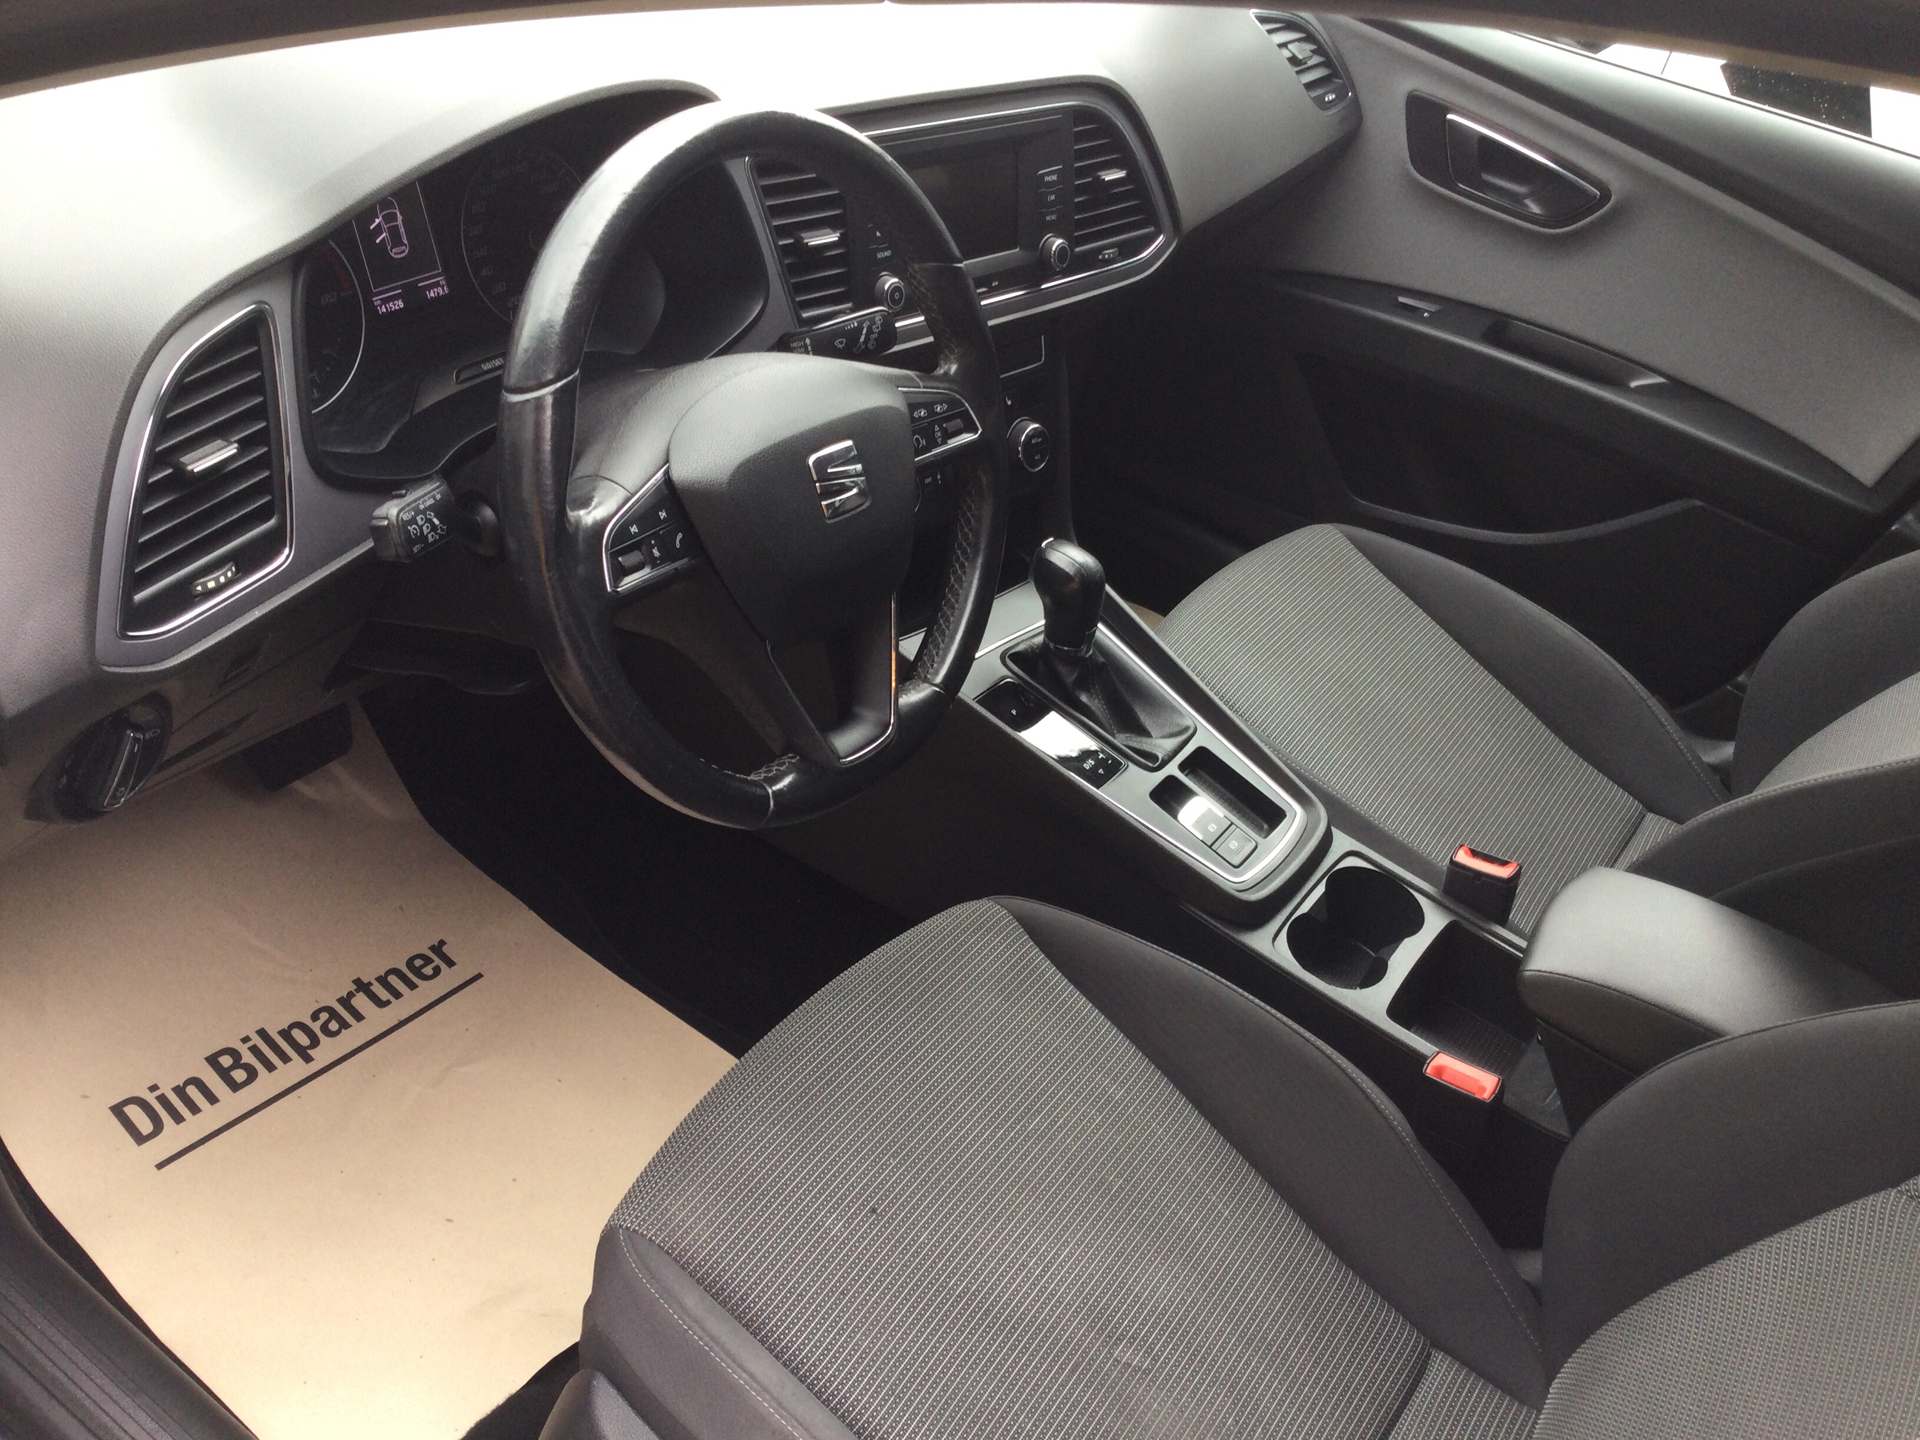 Billede af Seat Leon 1,4 TSI ACT Style Start/Stop DSG 150HK Stc 7g Aut.